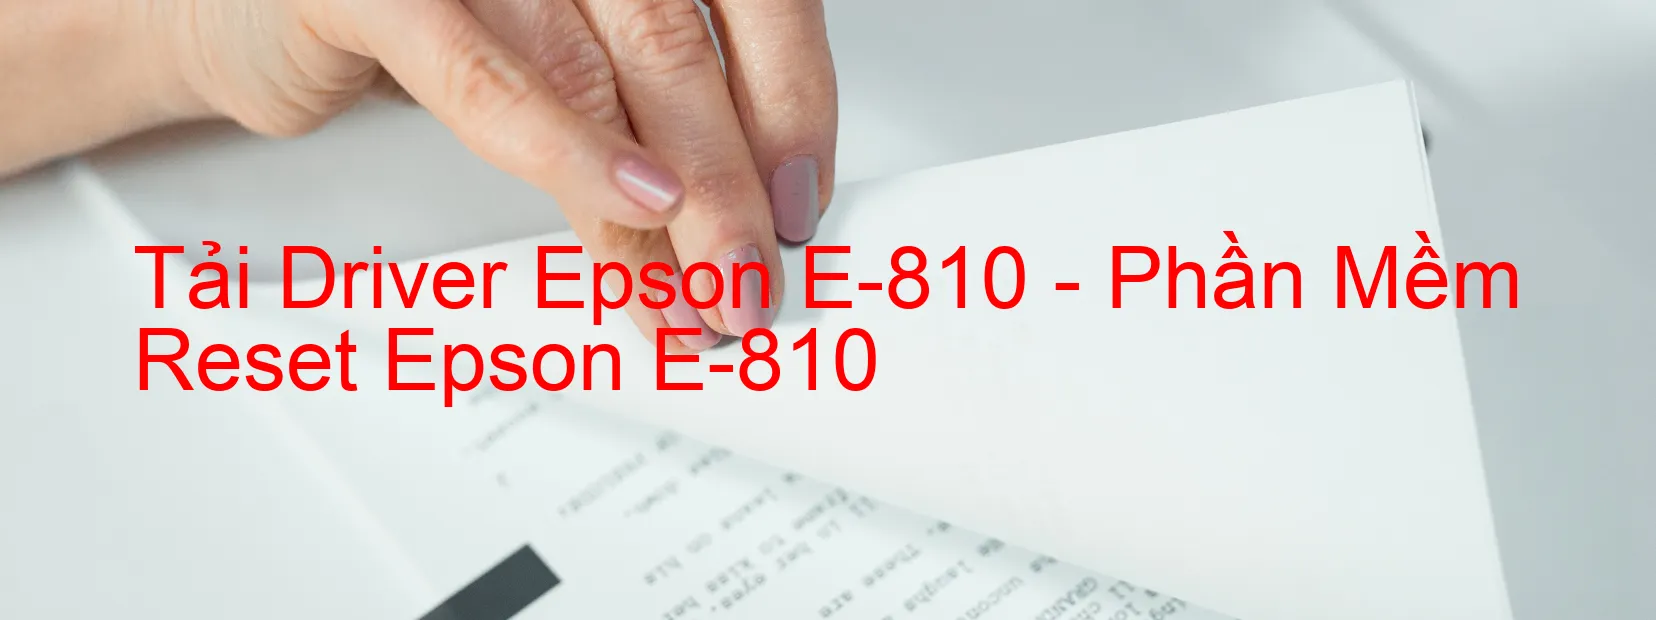 Driver Epson E-810, Phần Mềm Reset Epson E-810